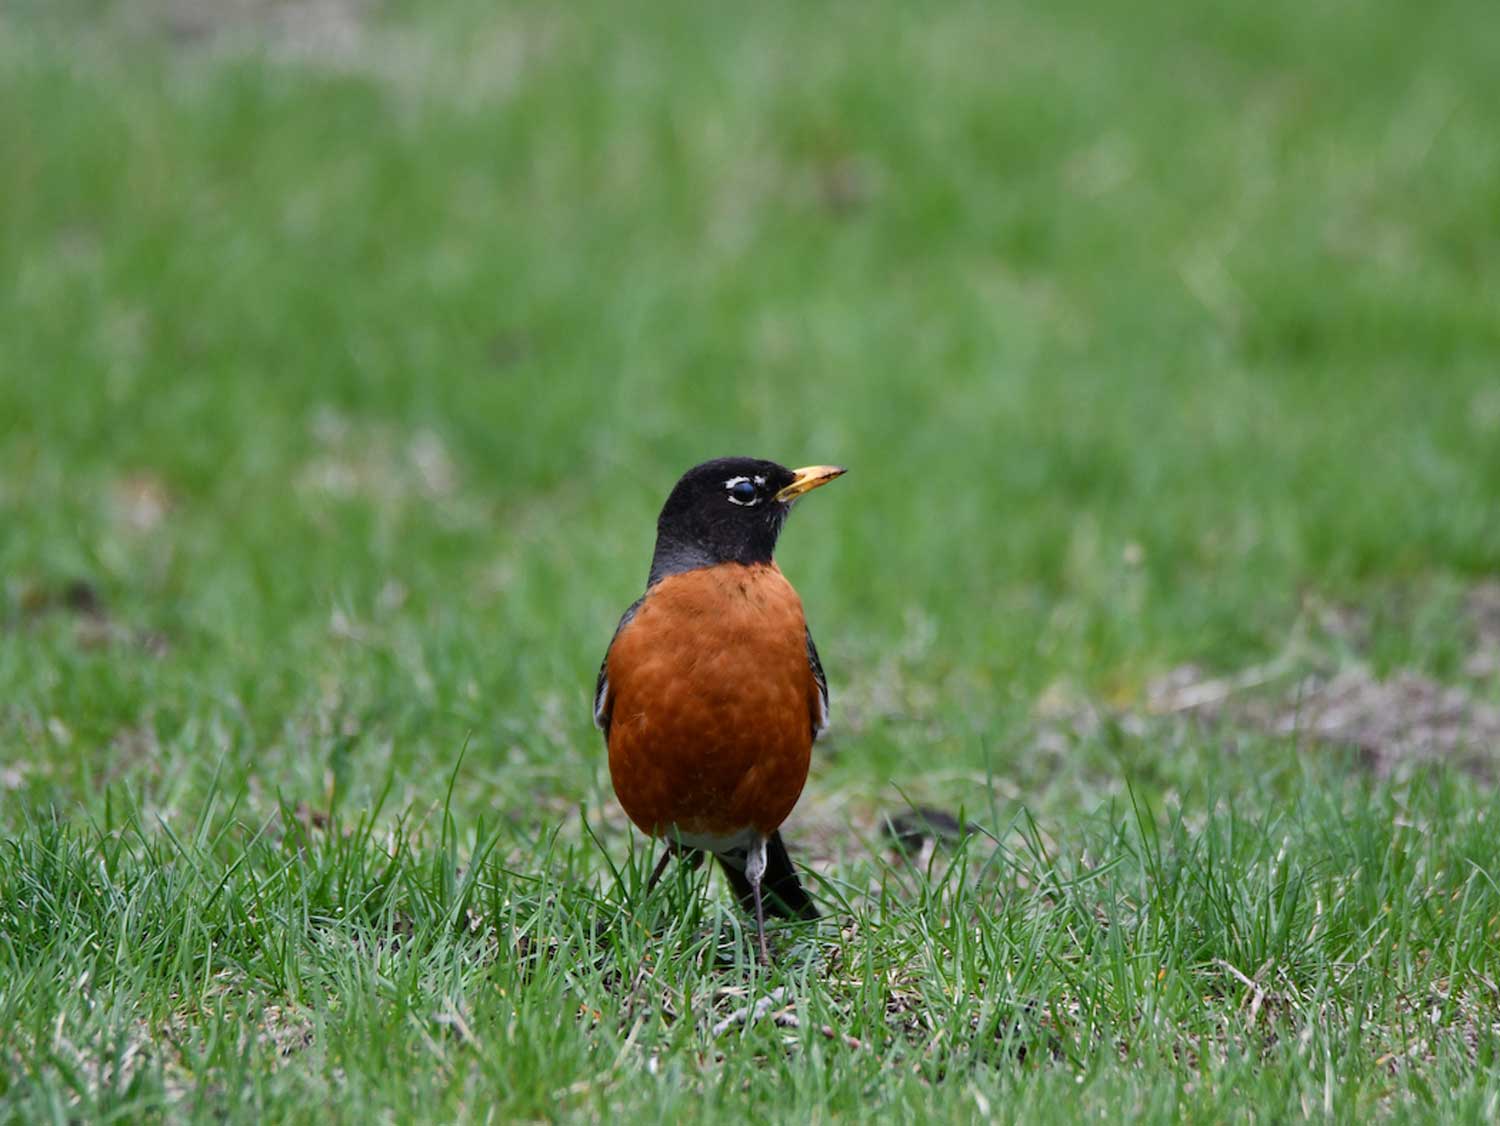 A robin standing in grass.